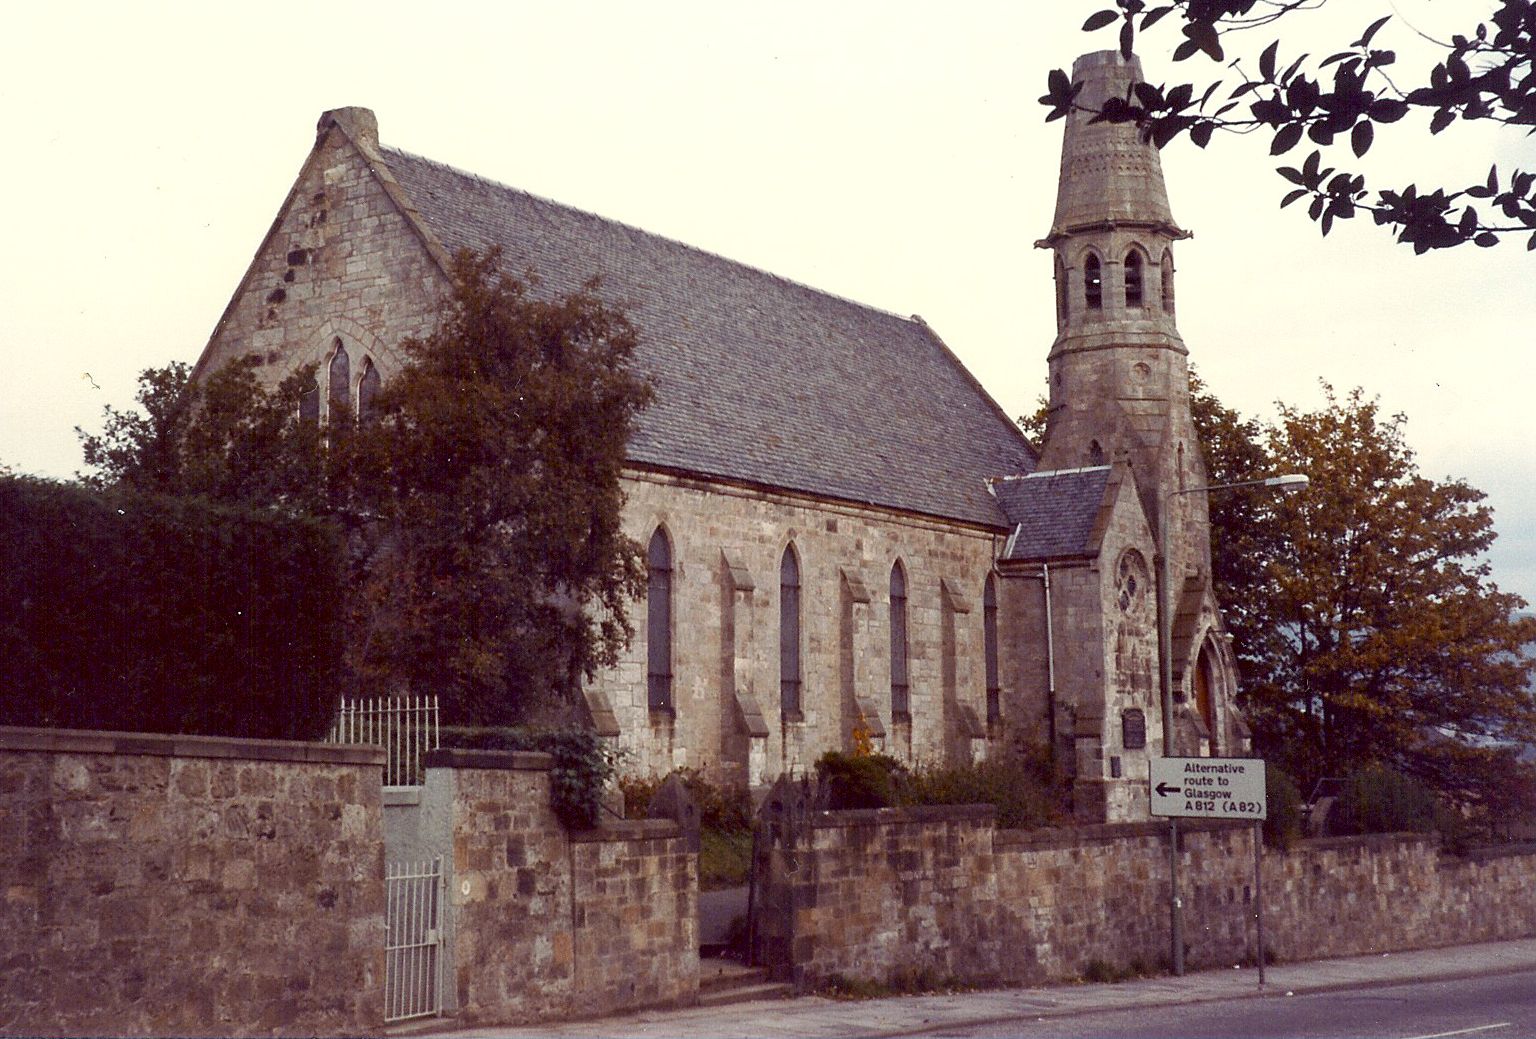 Dalreoch Church in Dumbarton